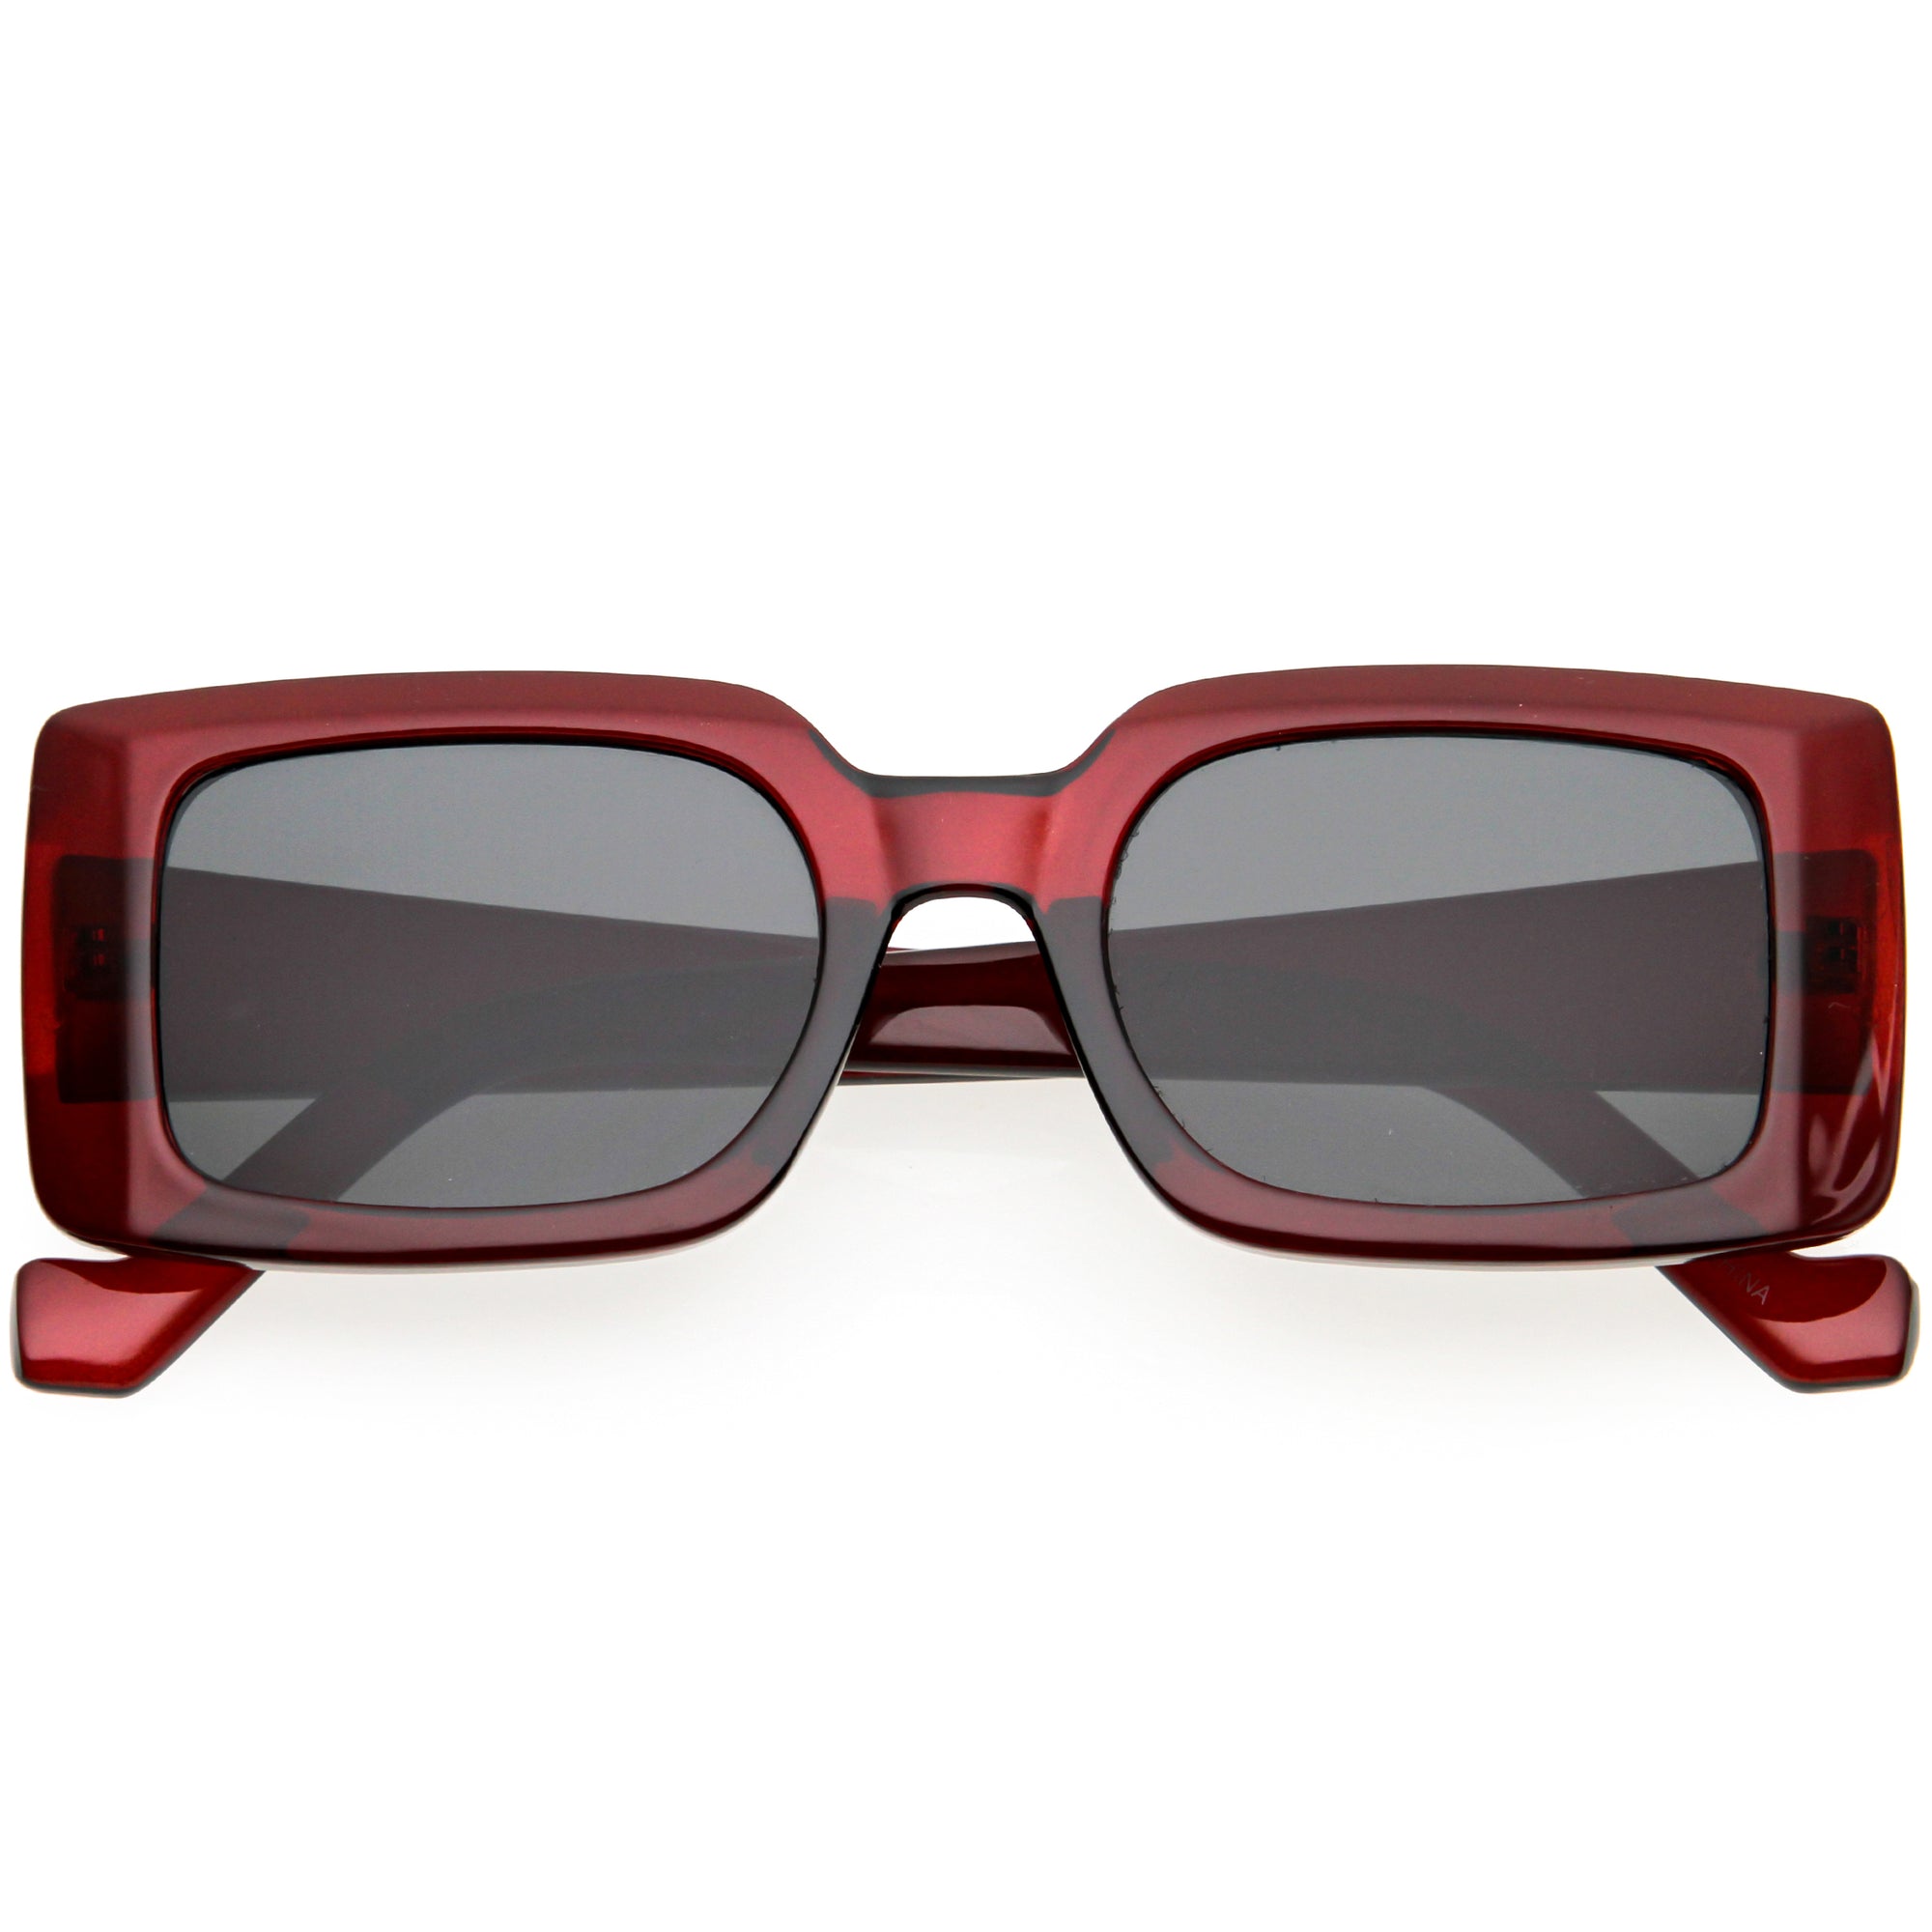 Retro Medium Square Flat Lens Thick Rimmed Rectangle Sunglasses D213